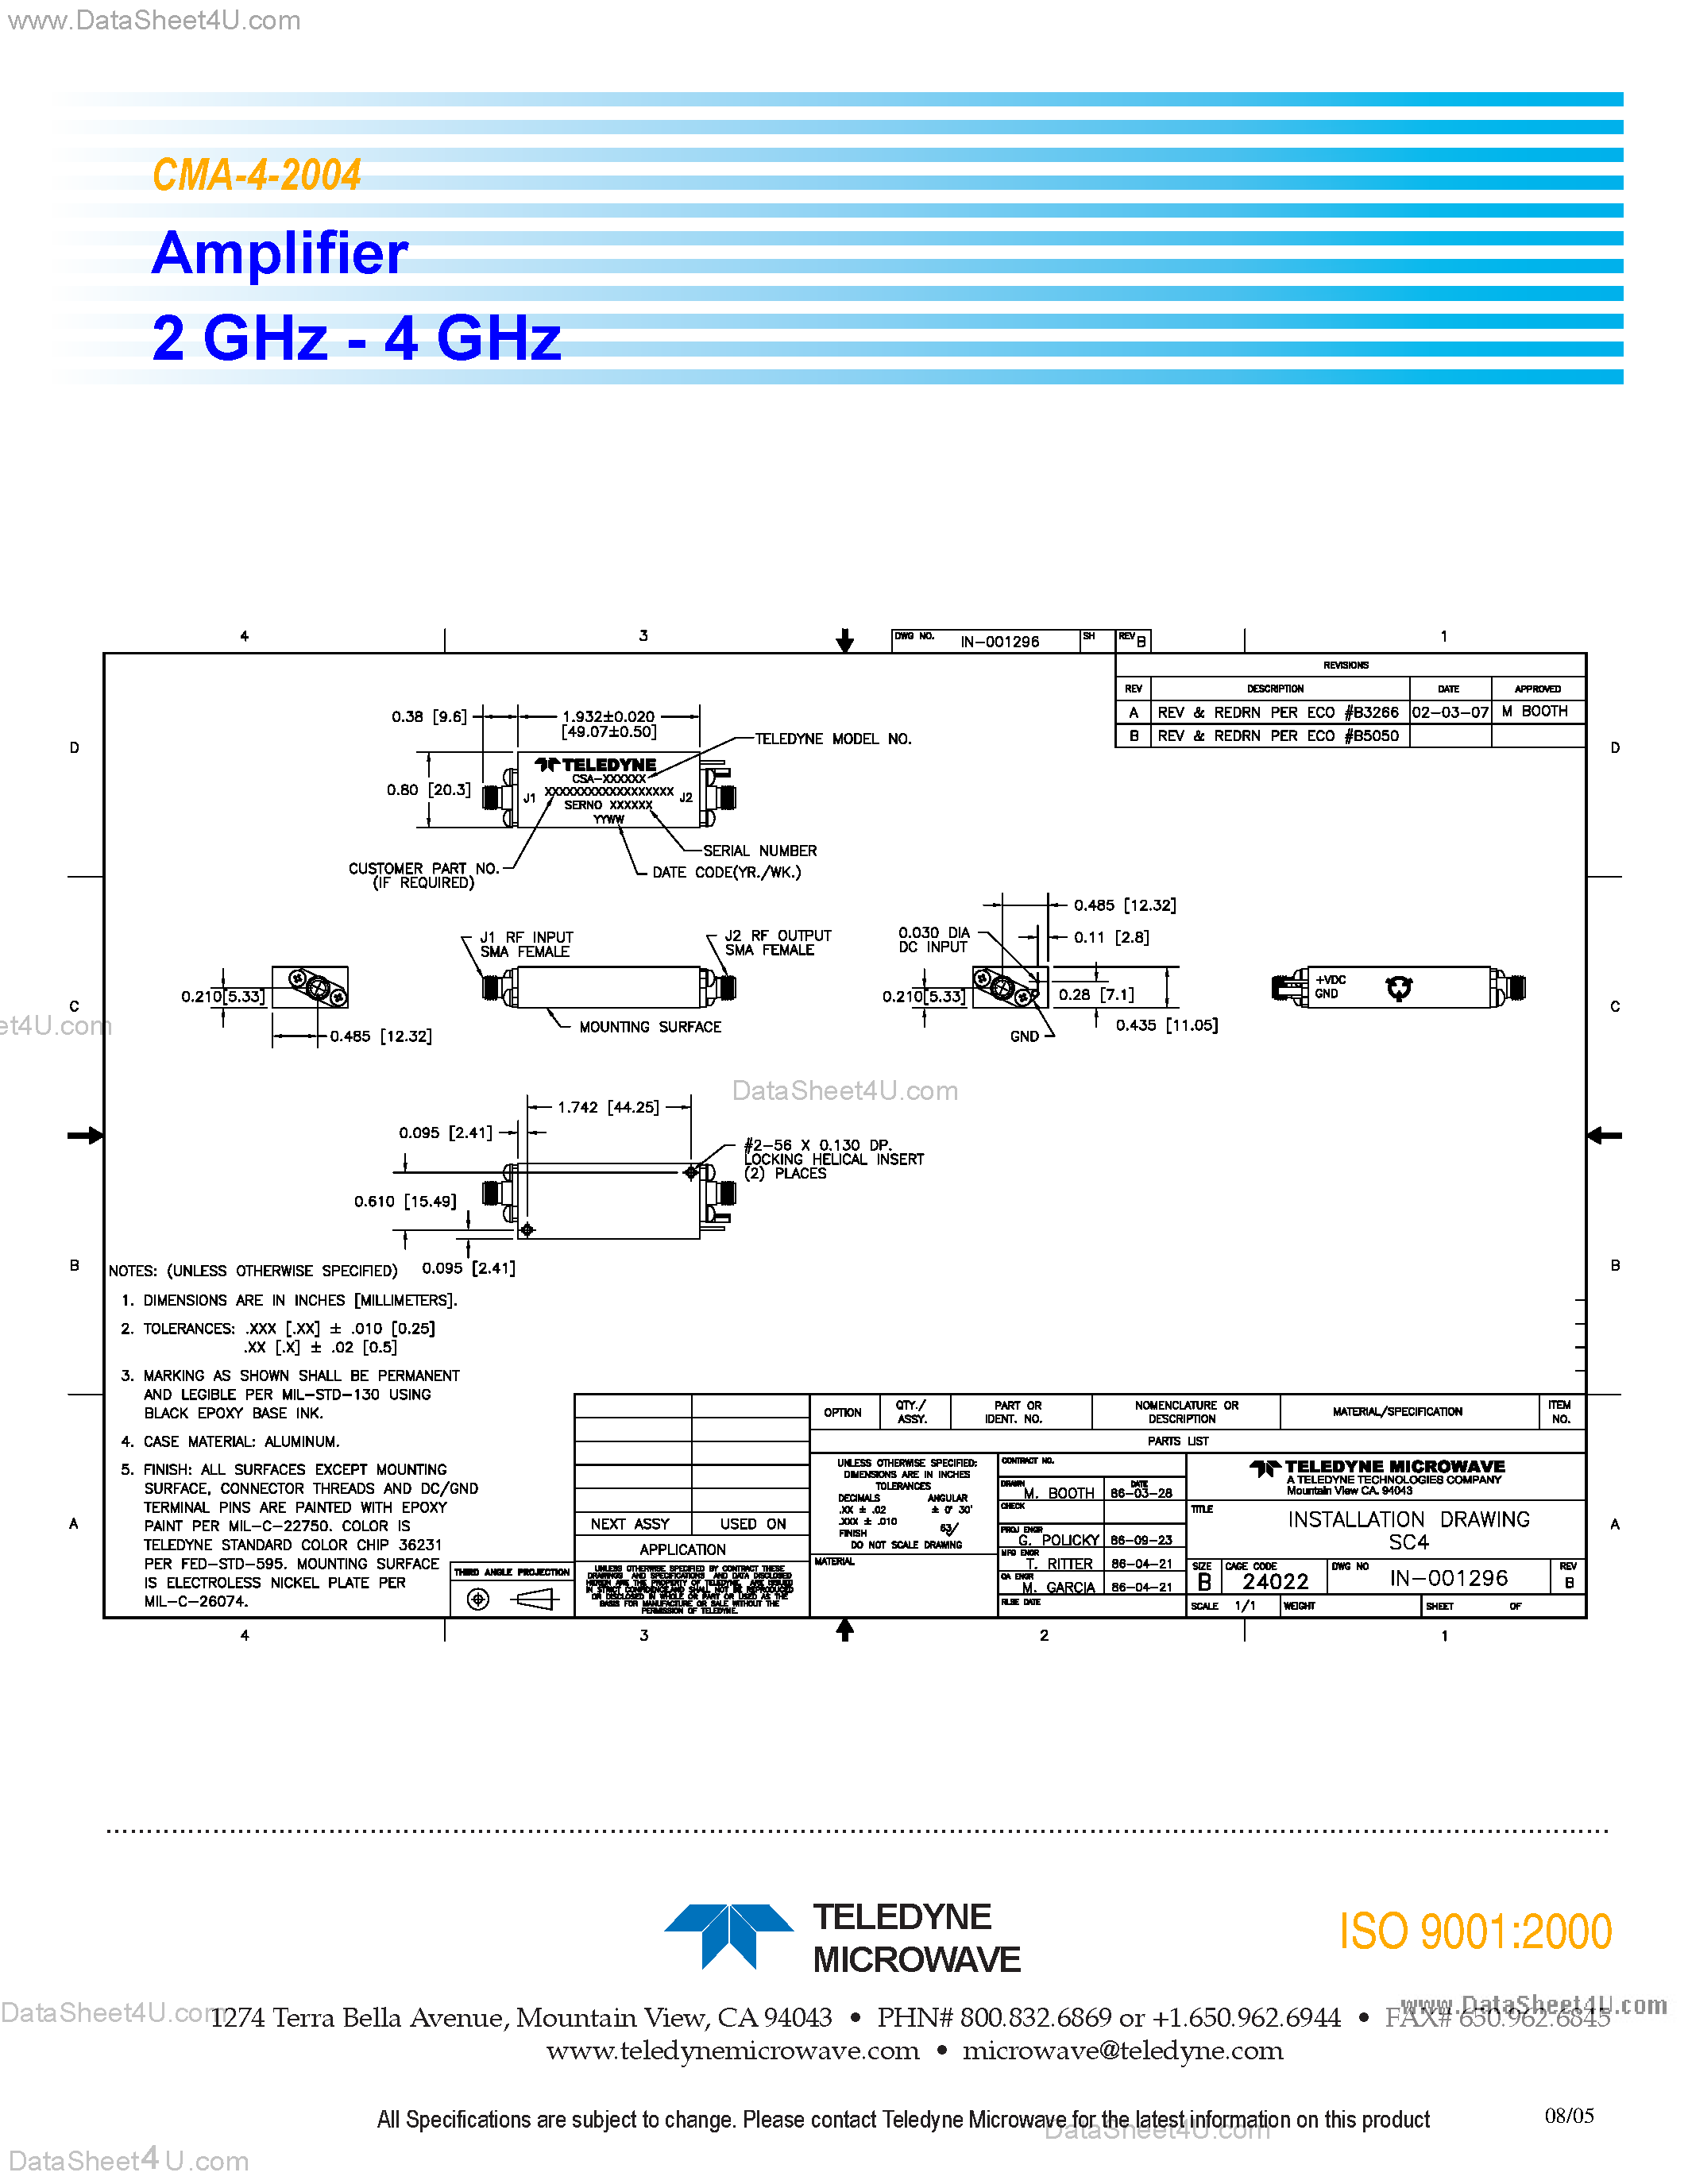 Даташит CMA-4-2004 - Amplifier 2 GHz - 4 GHz страница 2